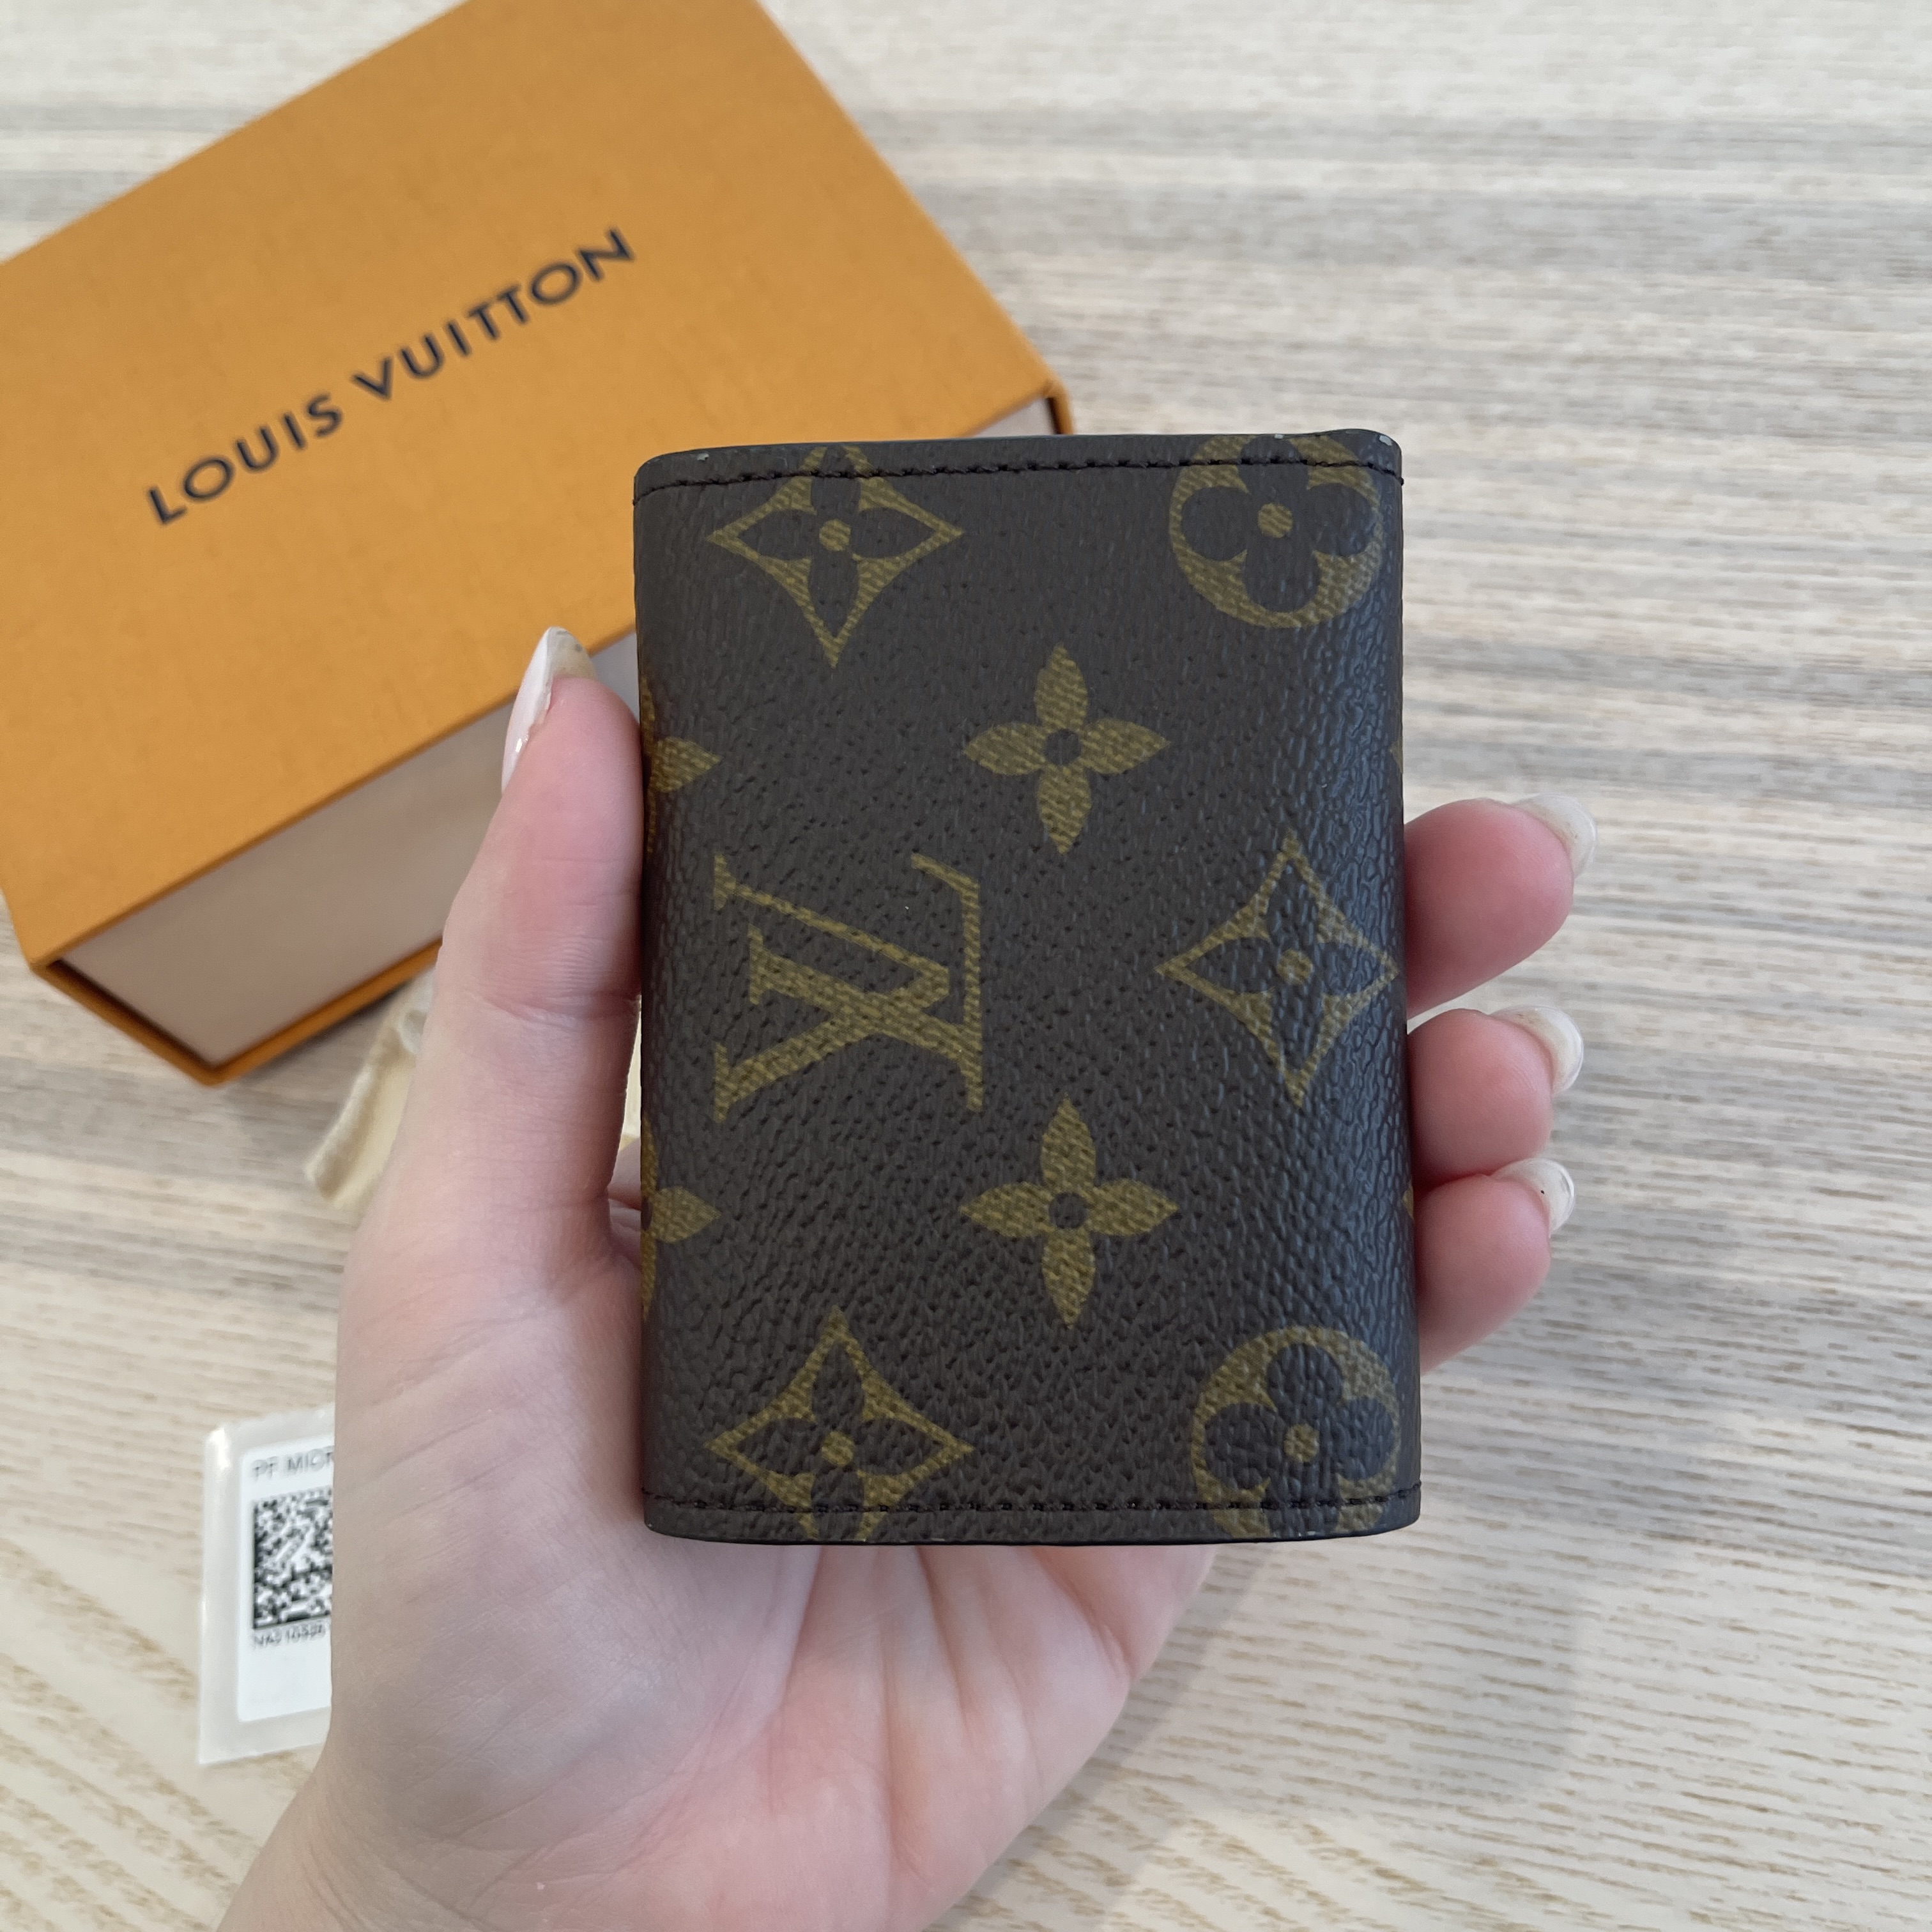 Shop Louis Vuitton MONOGRAM Micro wallet (M68704) by sunnyfunny